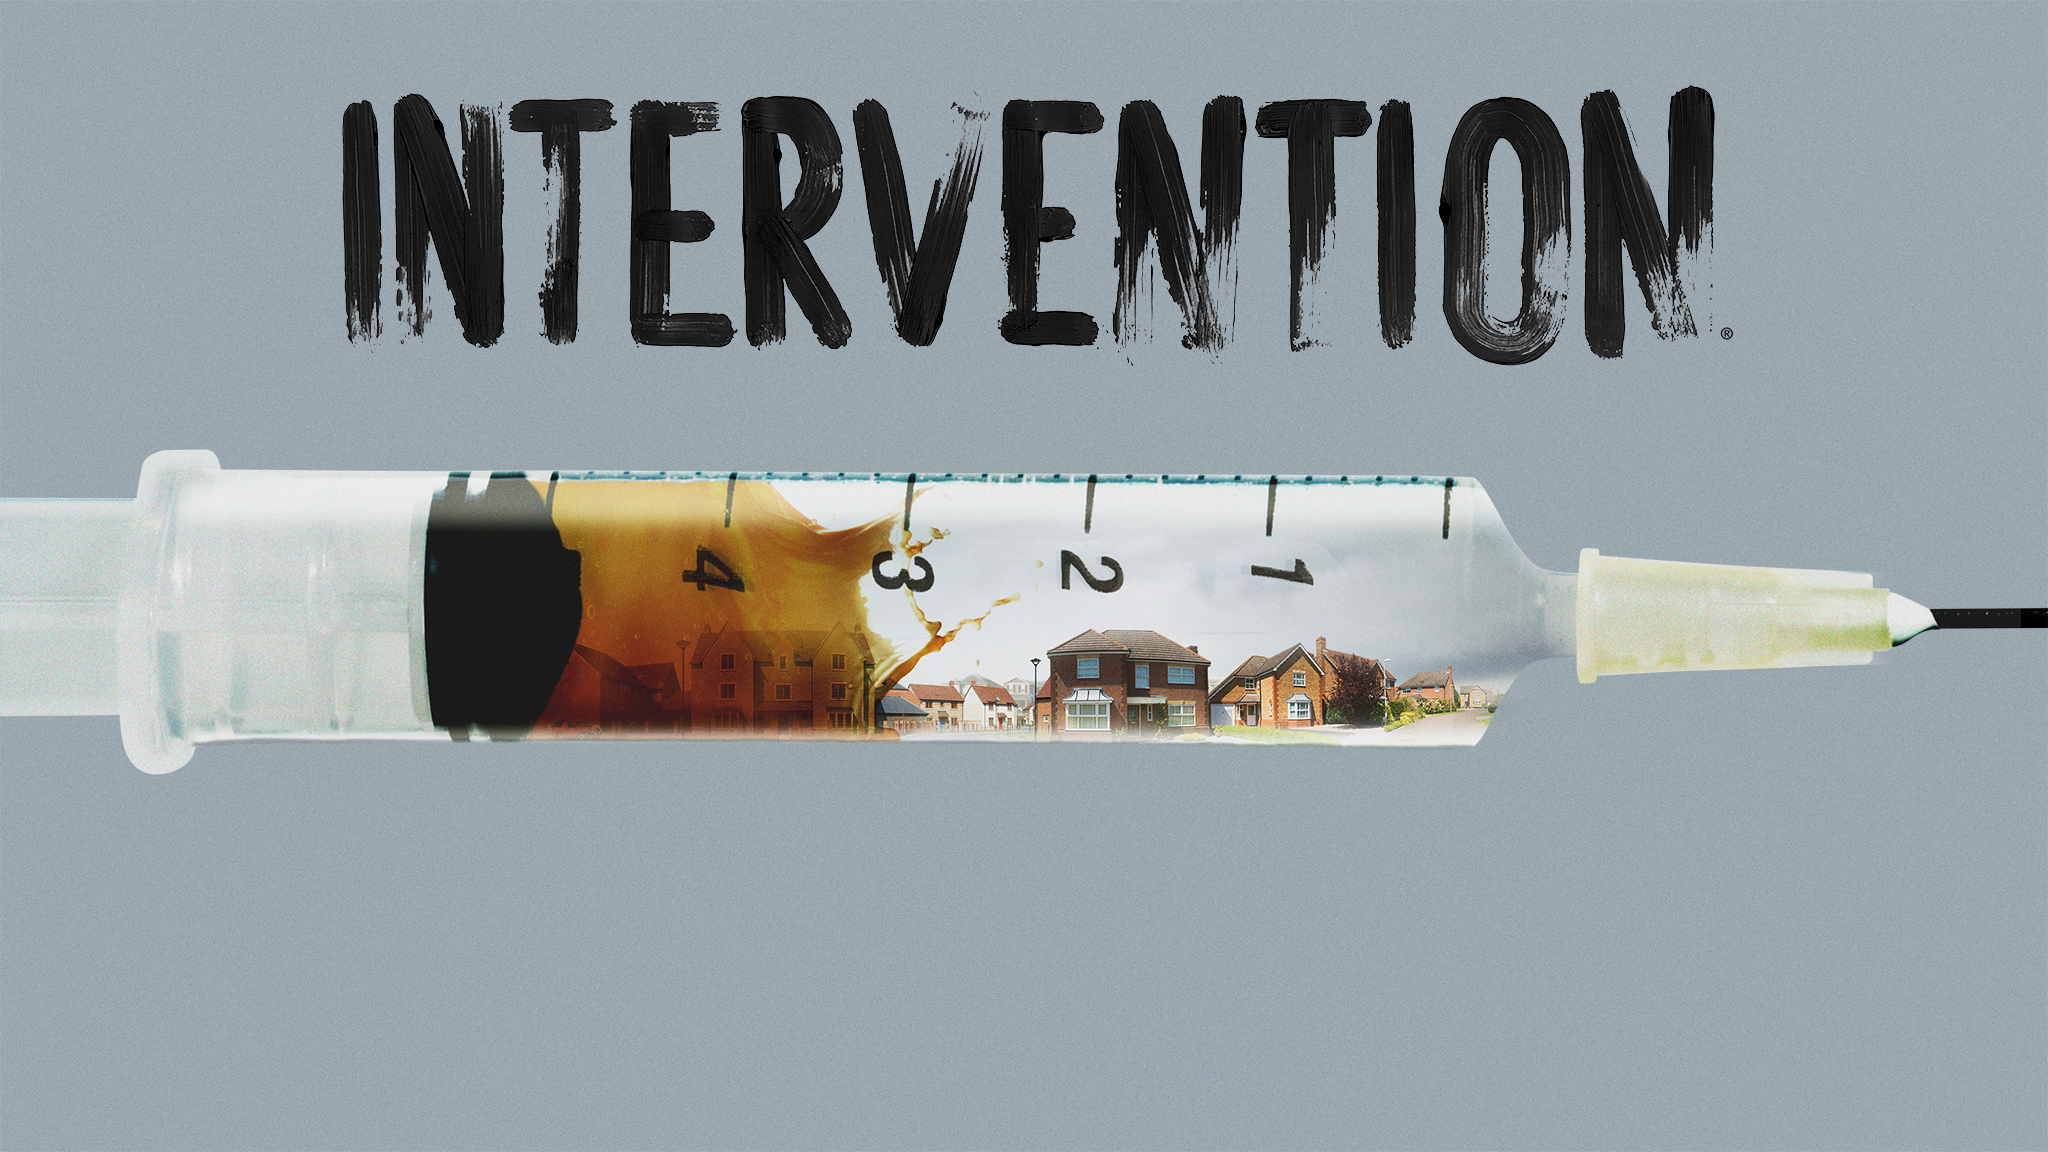 Intervention Full Episodes, Video & More A&E